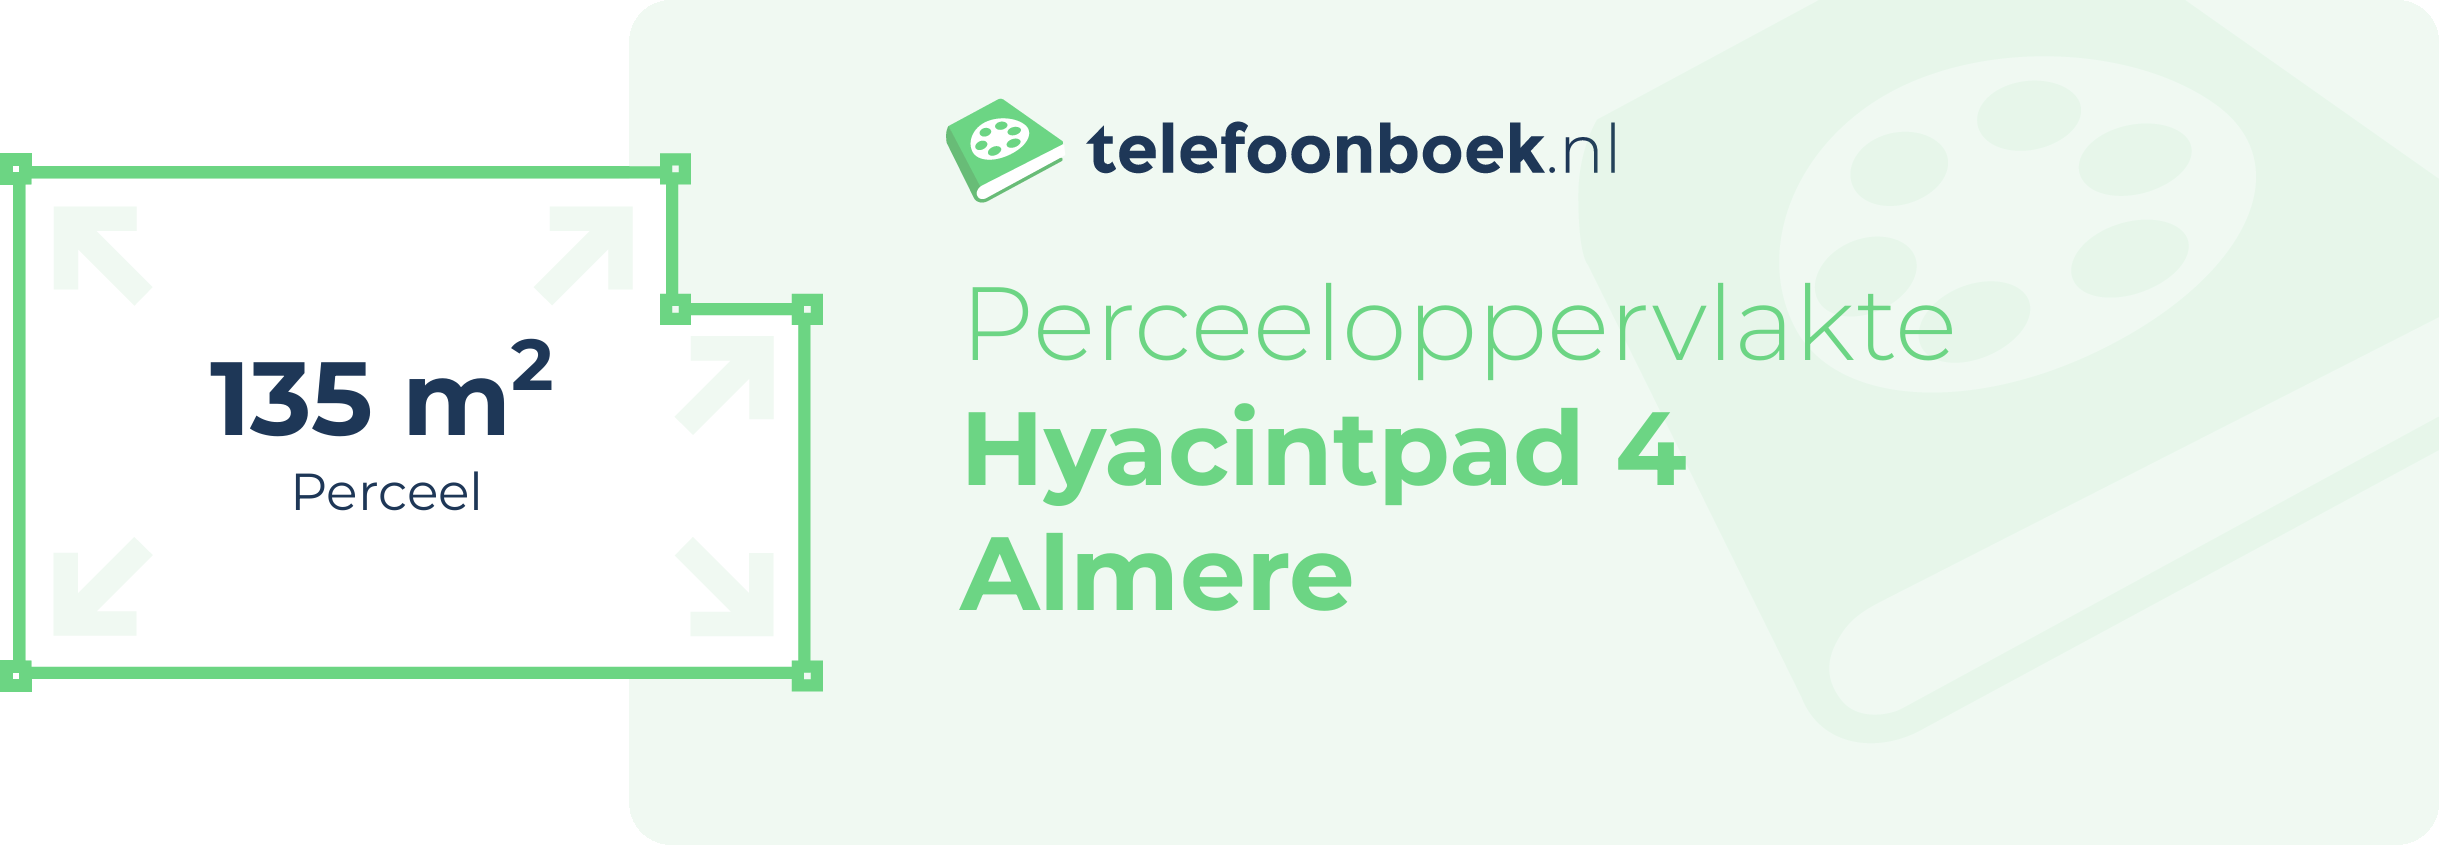 Perceeloppervlakte Hyacintpad 4 Almere